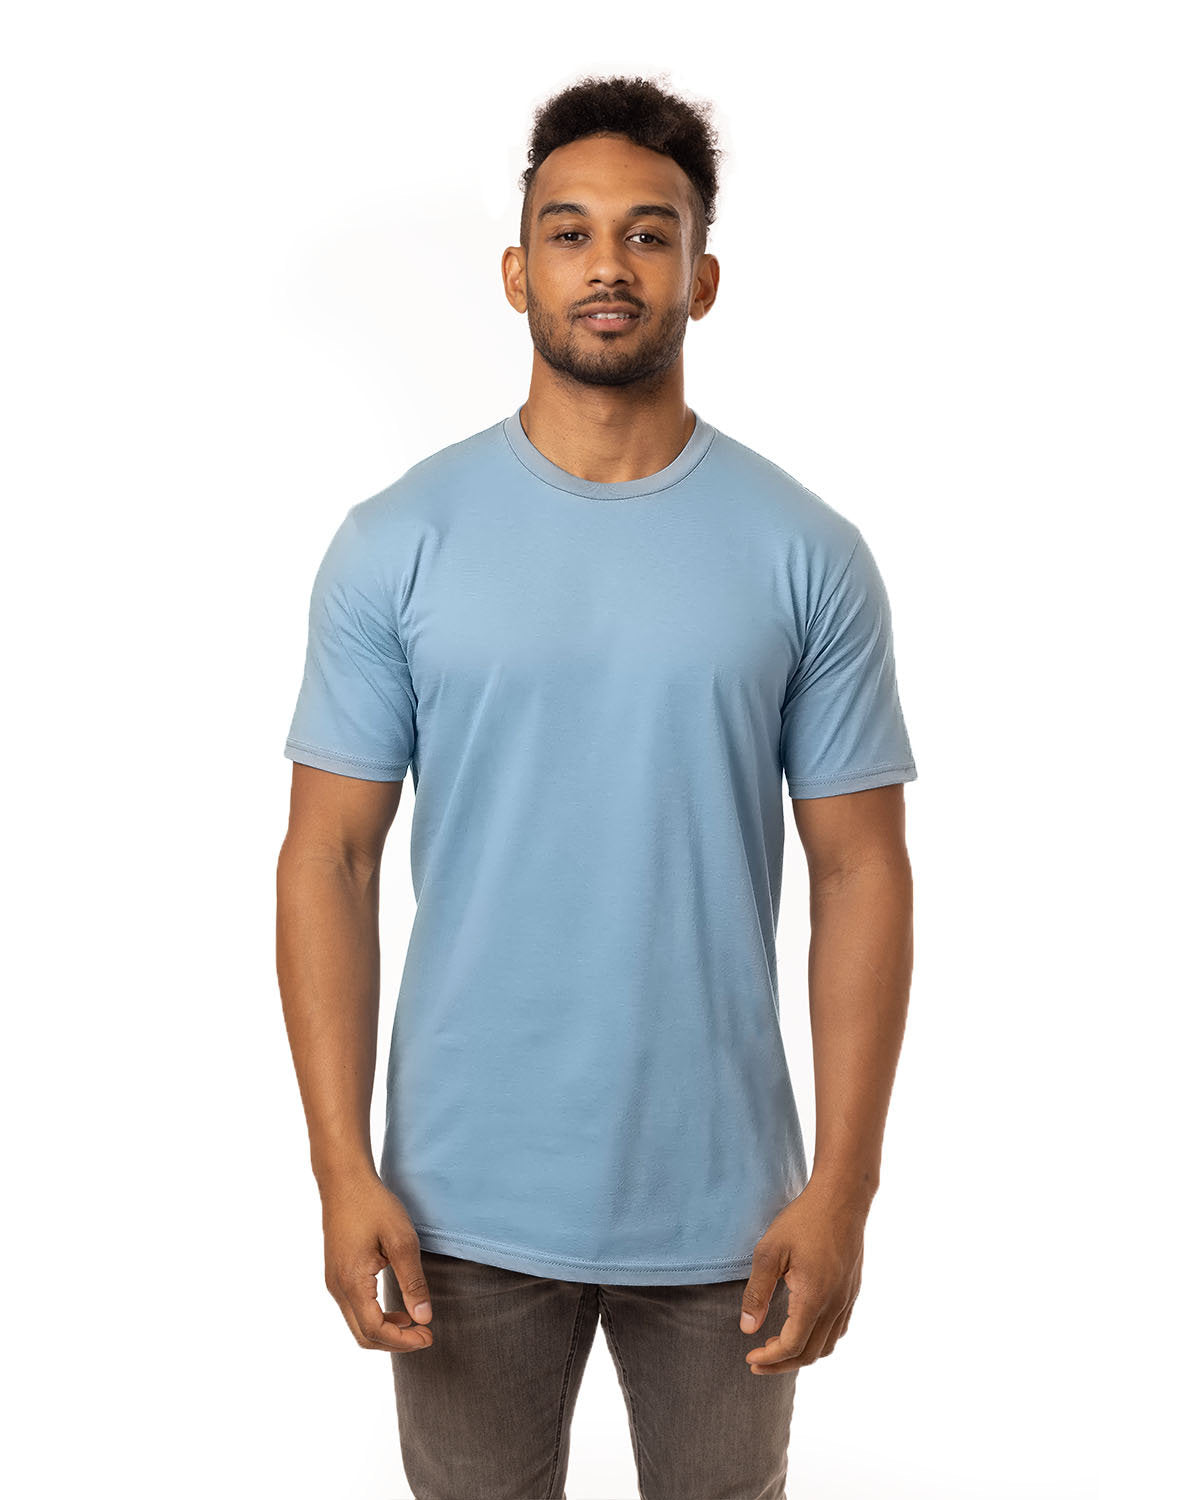 Customizable Econscious Organic Cotton Mens Short-Sleeve T-Shirt in light blue.